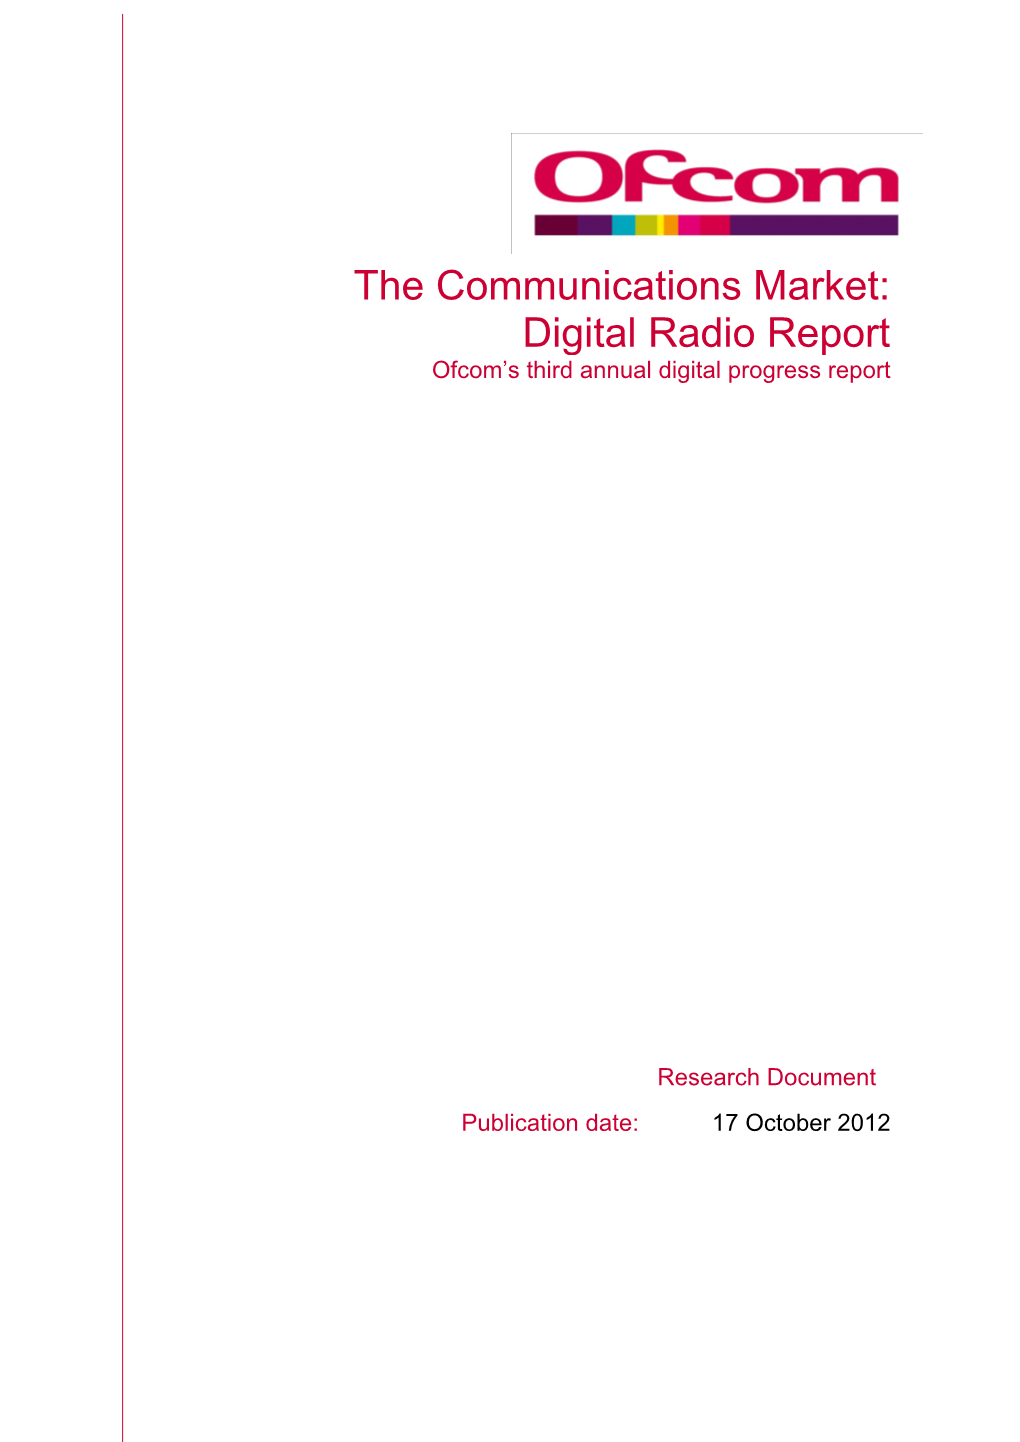 Digital Radio Report 2012